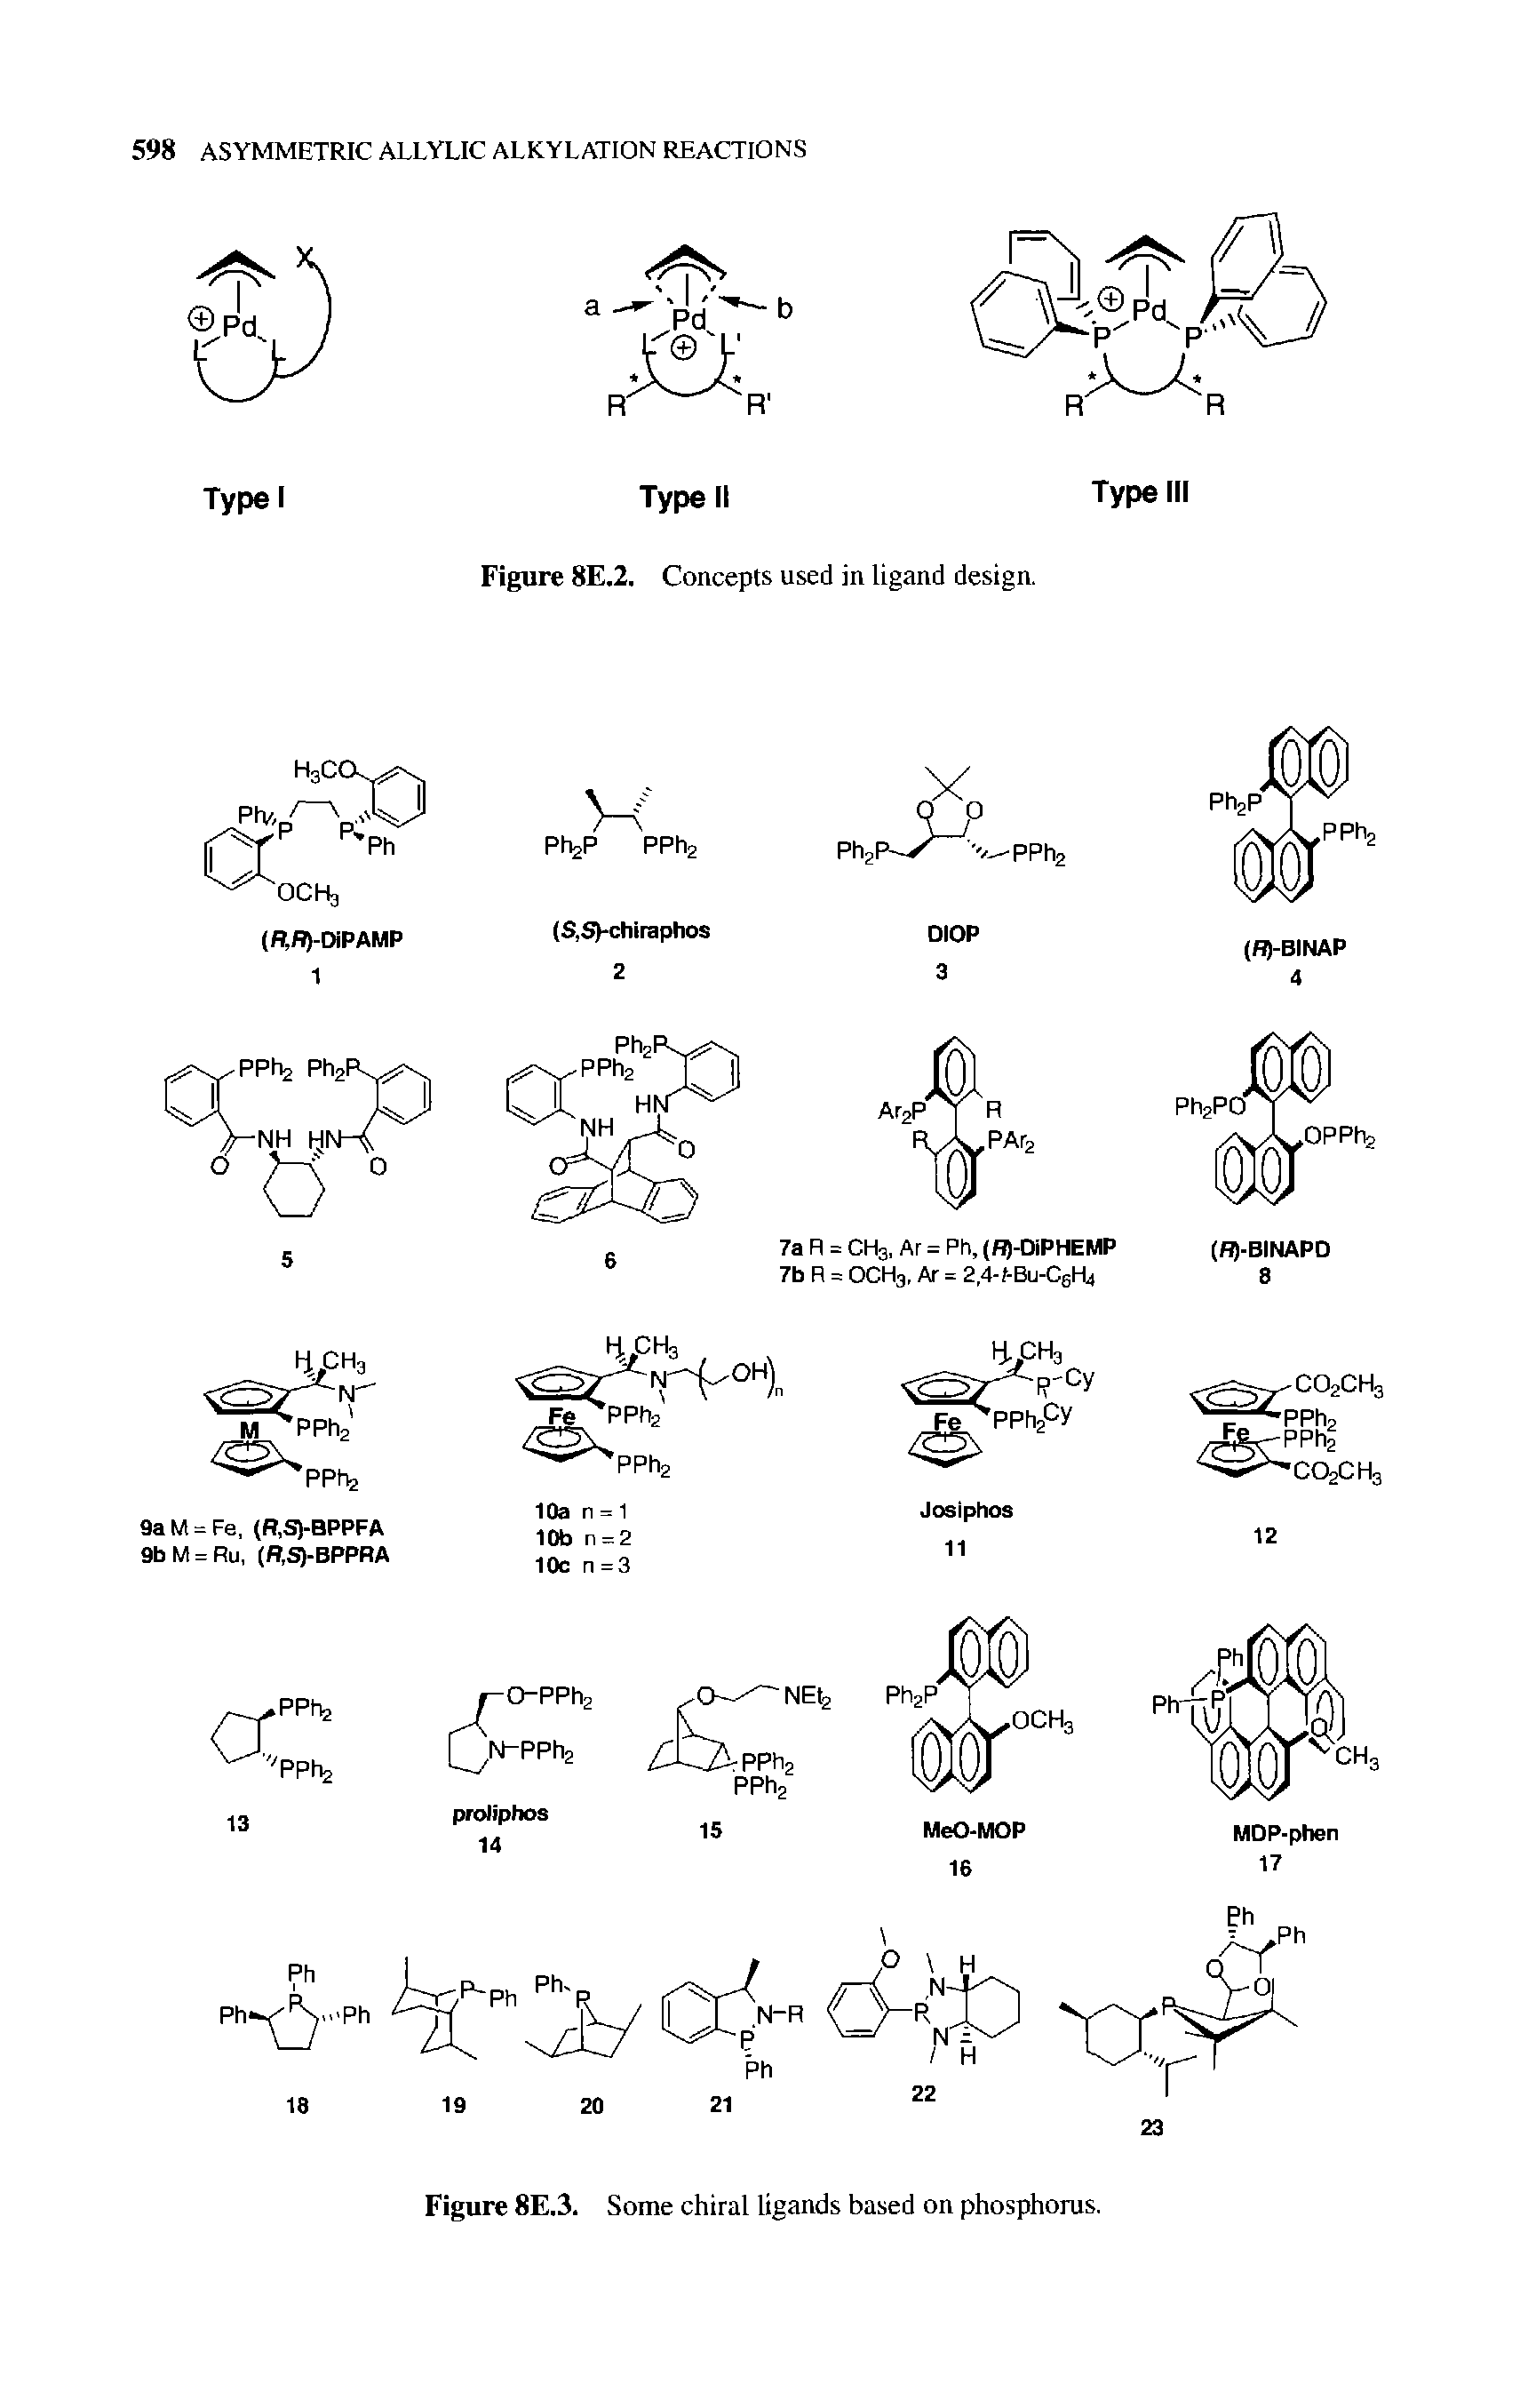 Figure 8E.3. Some chiral ligands based on phosphorus.